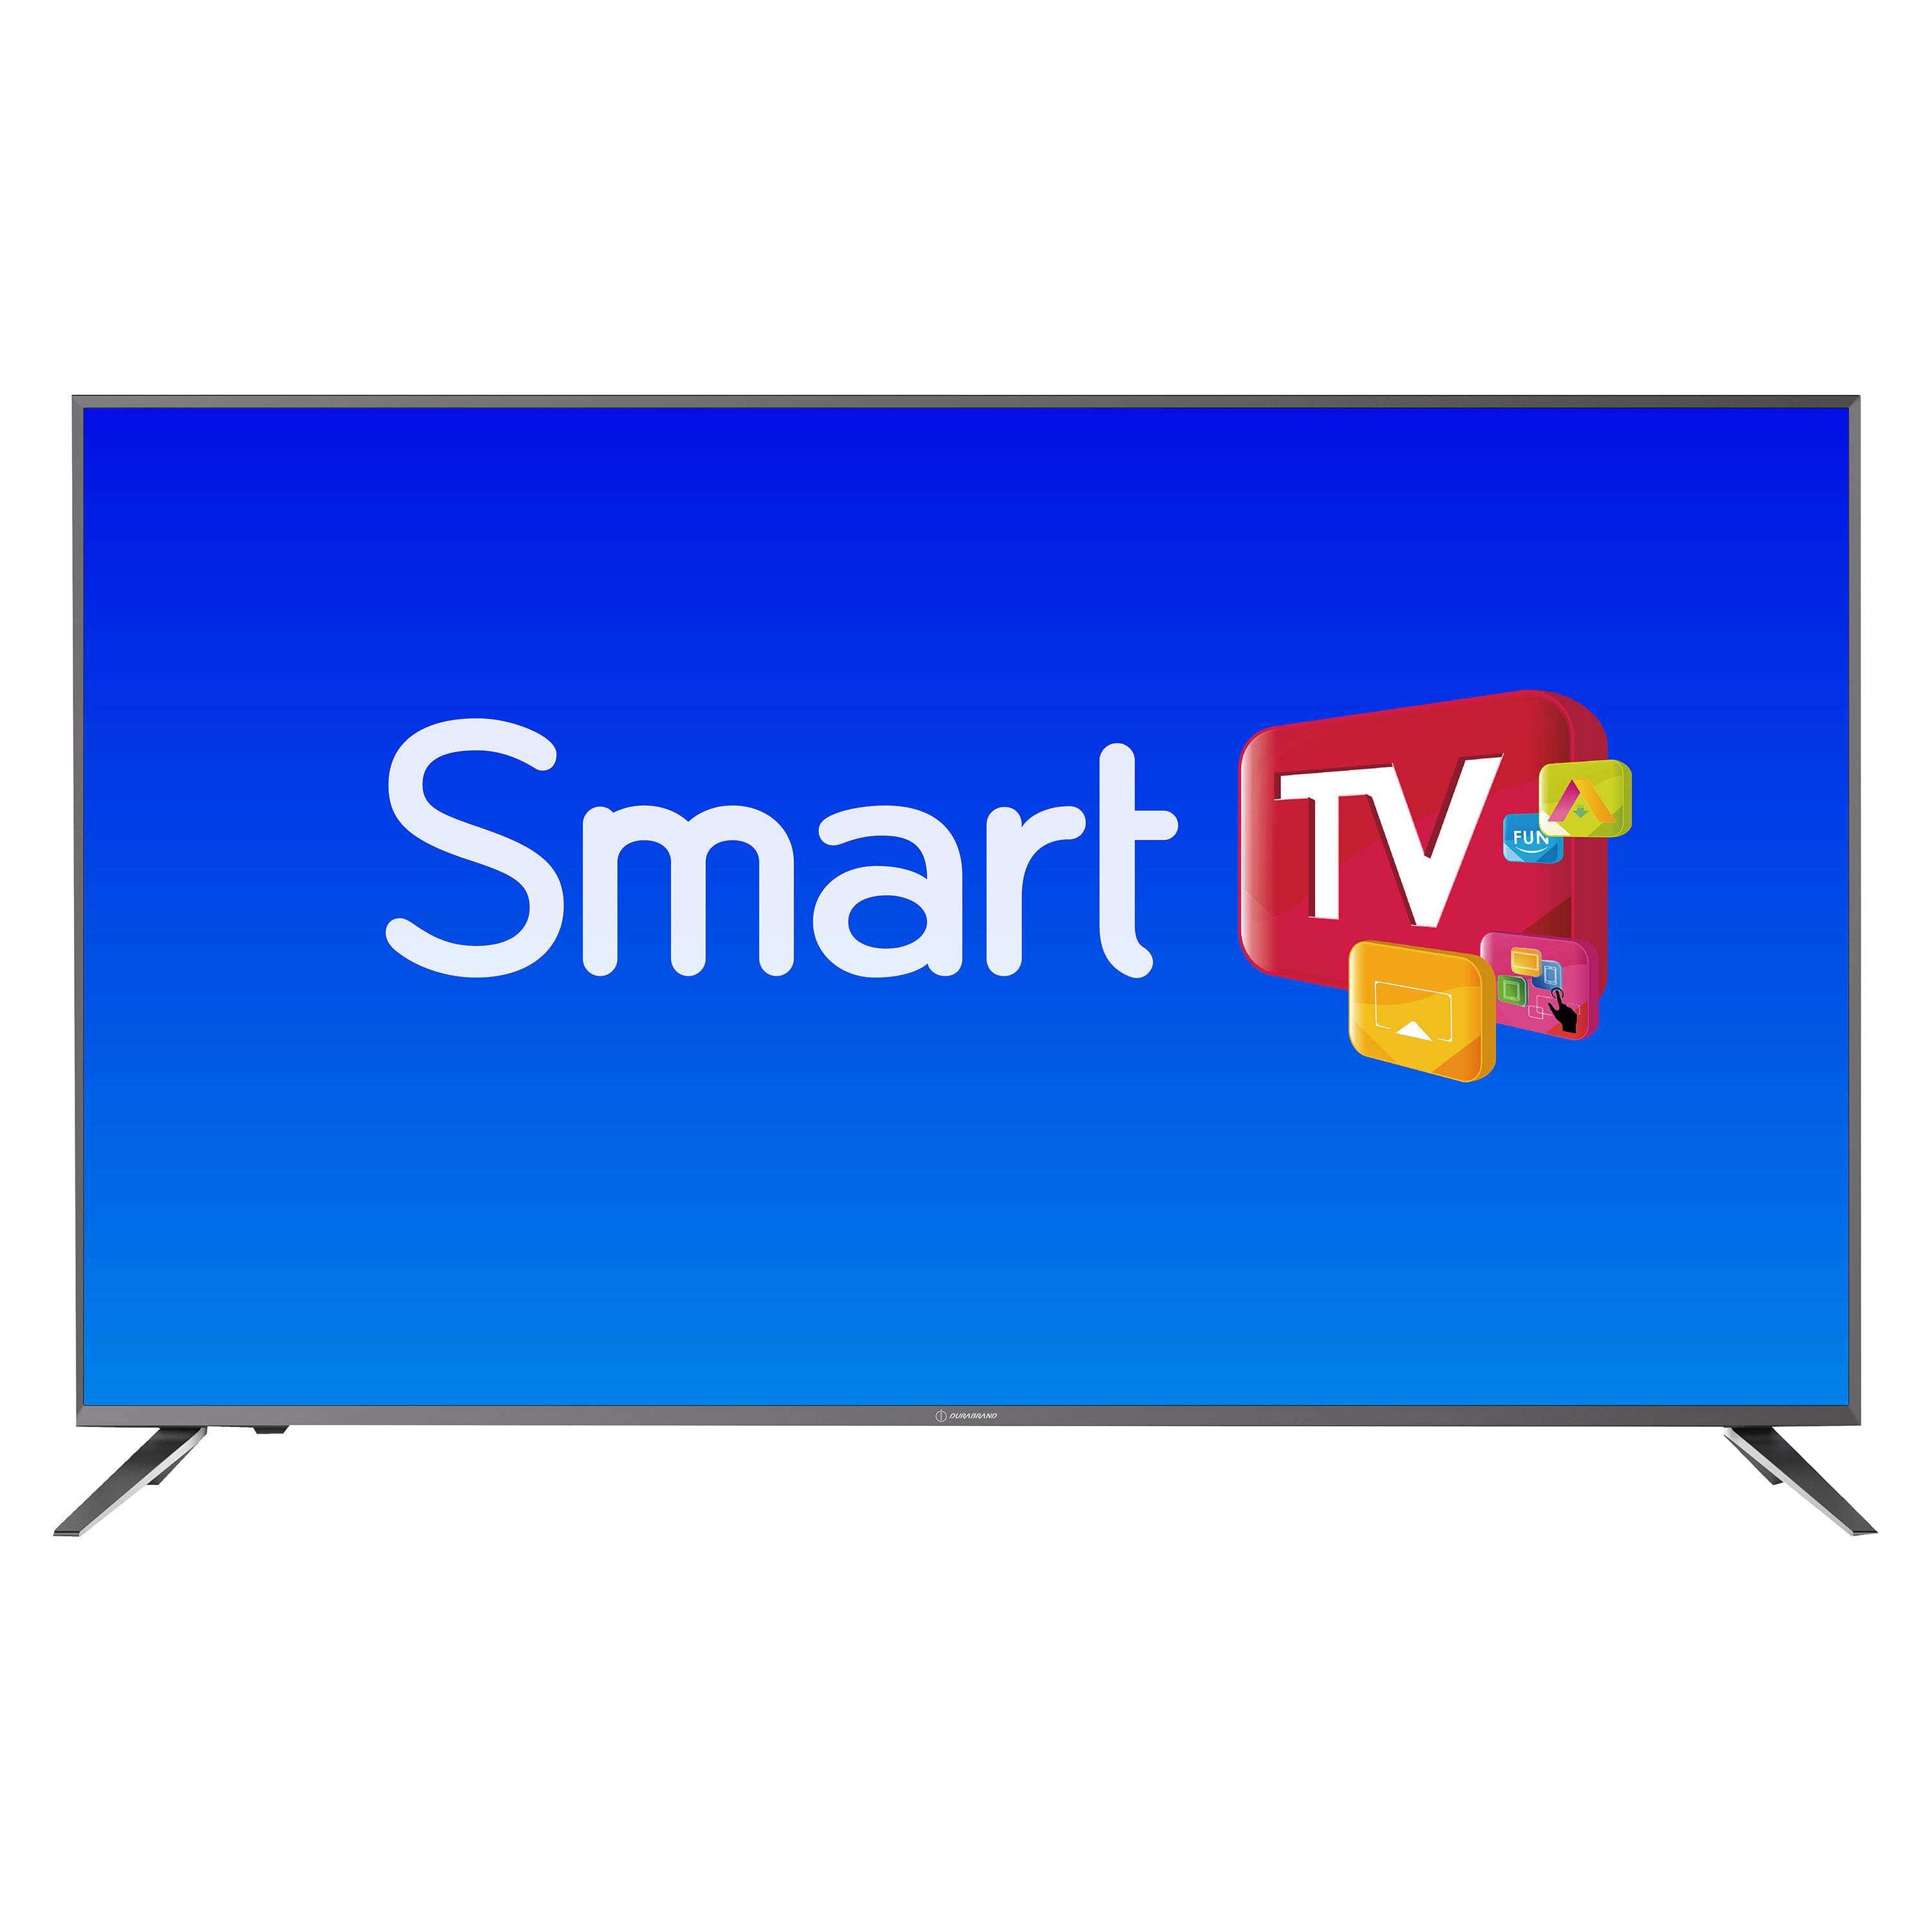 Comprar Pantalla Smart TV Durabrand, Android Led De 40 Pulgadas